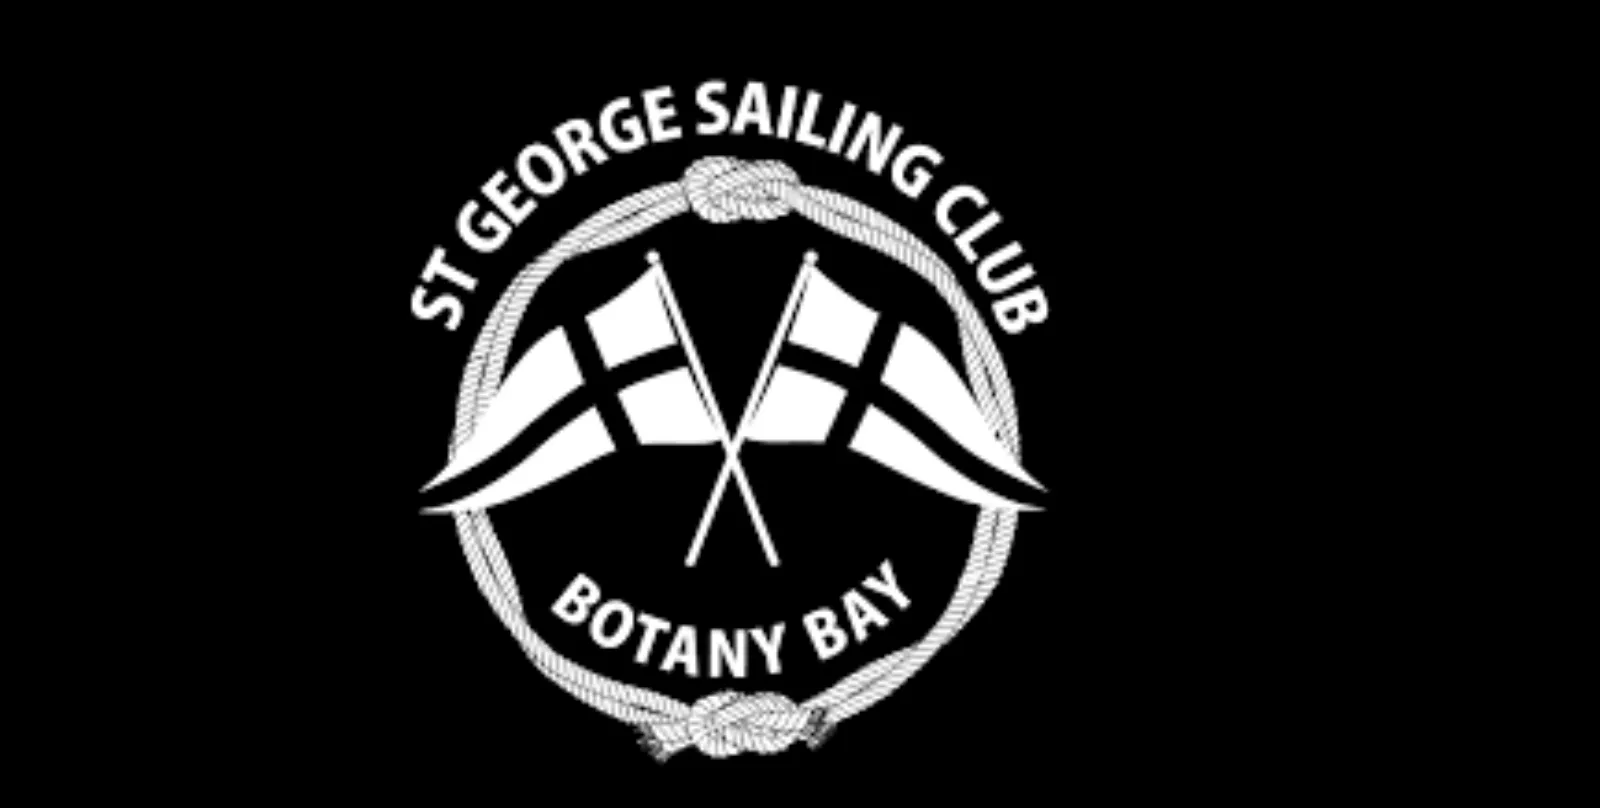 St George Sailing Club Menu Australia